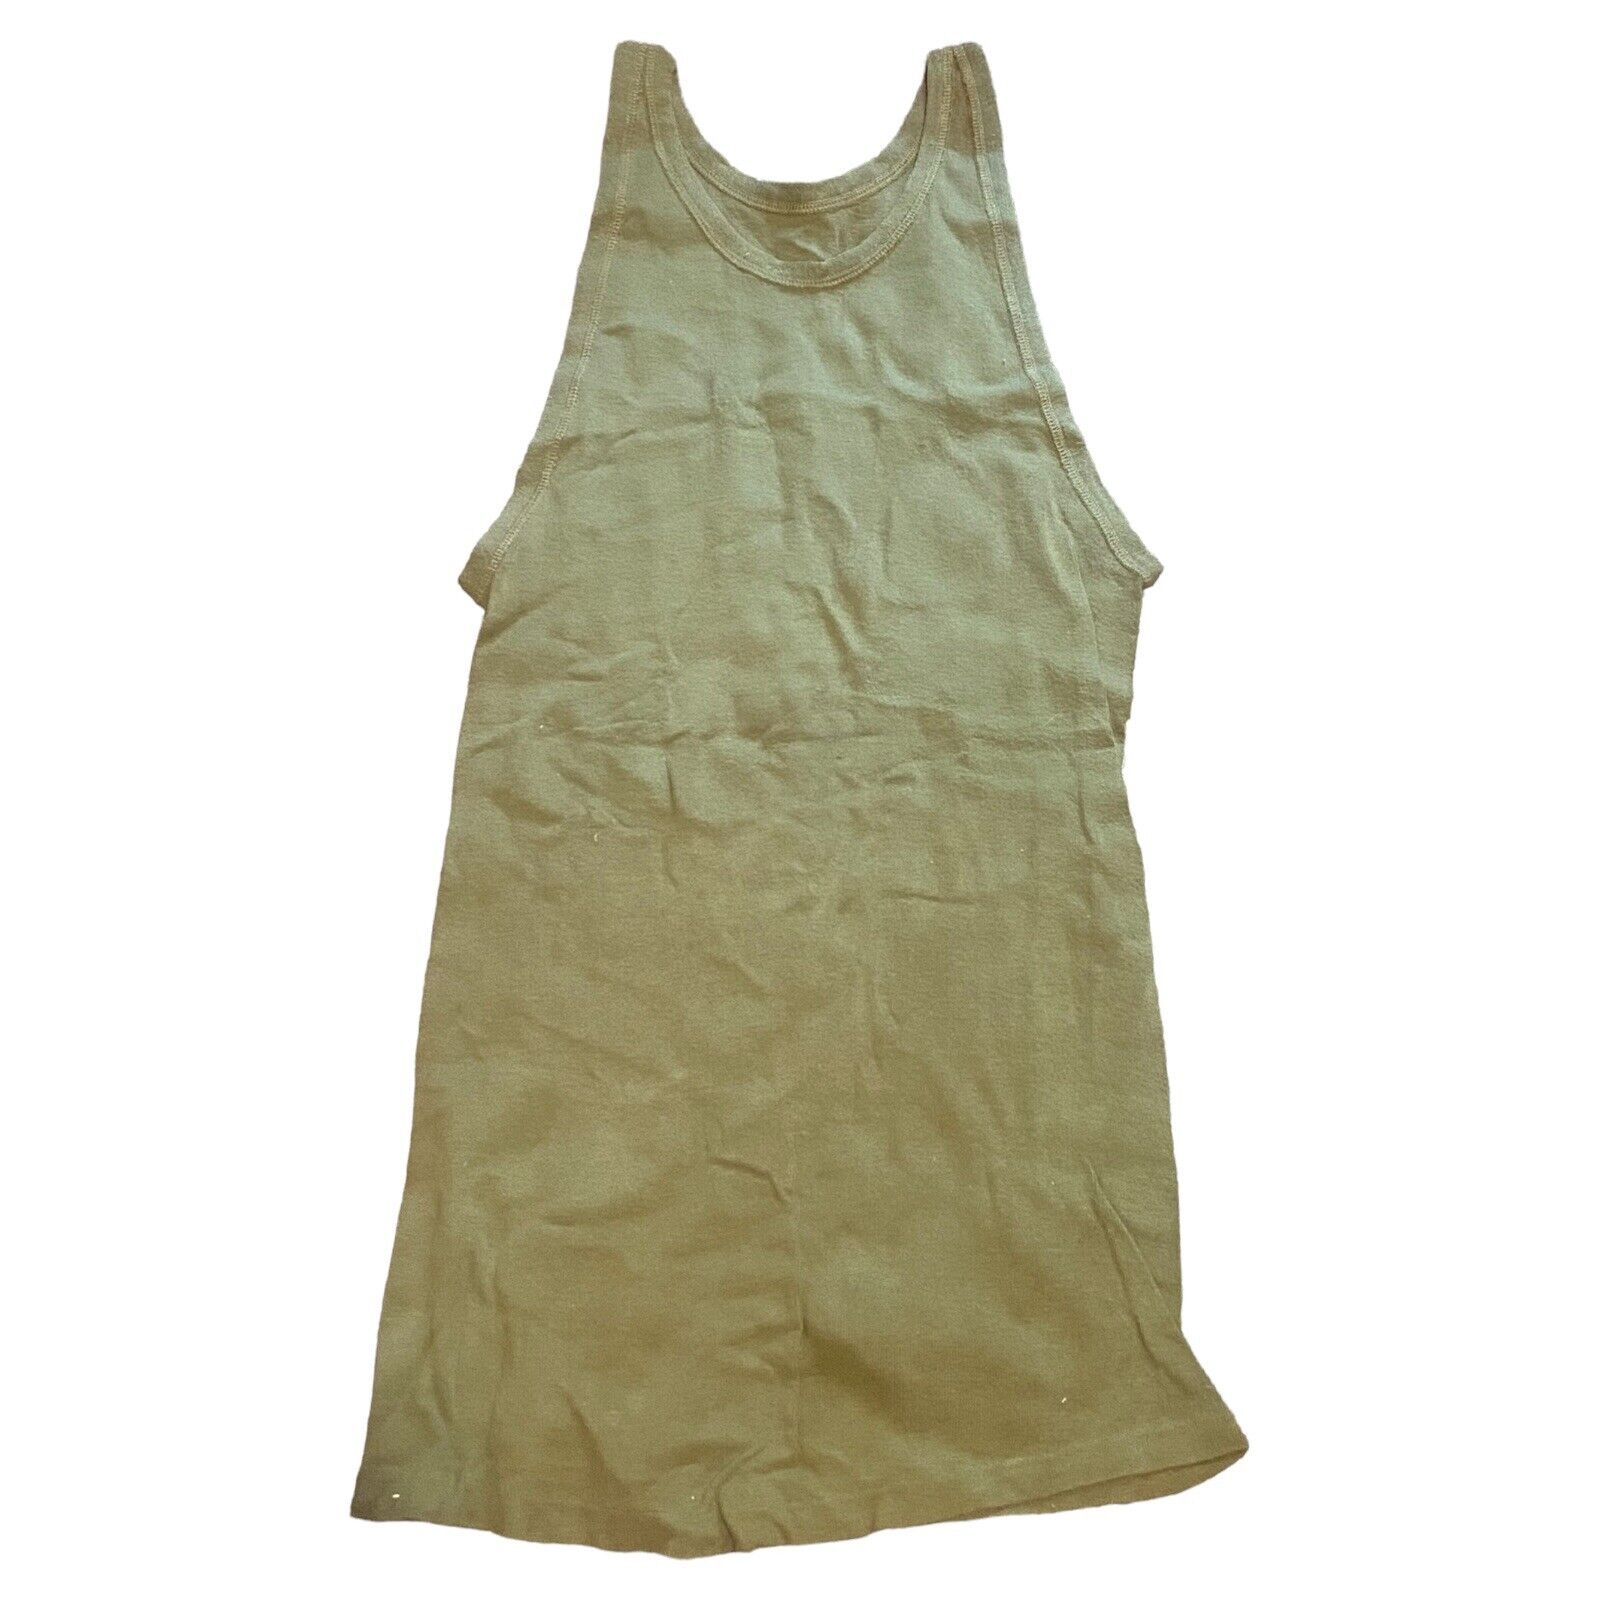 Vintage US Army WWII Tank Top Shirt Undershirt 1940s Sleeveless T Shirt Green